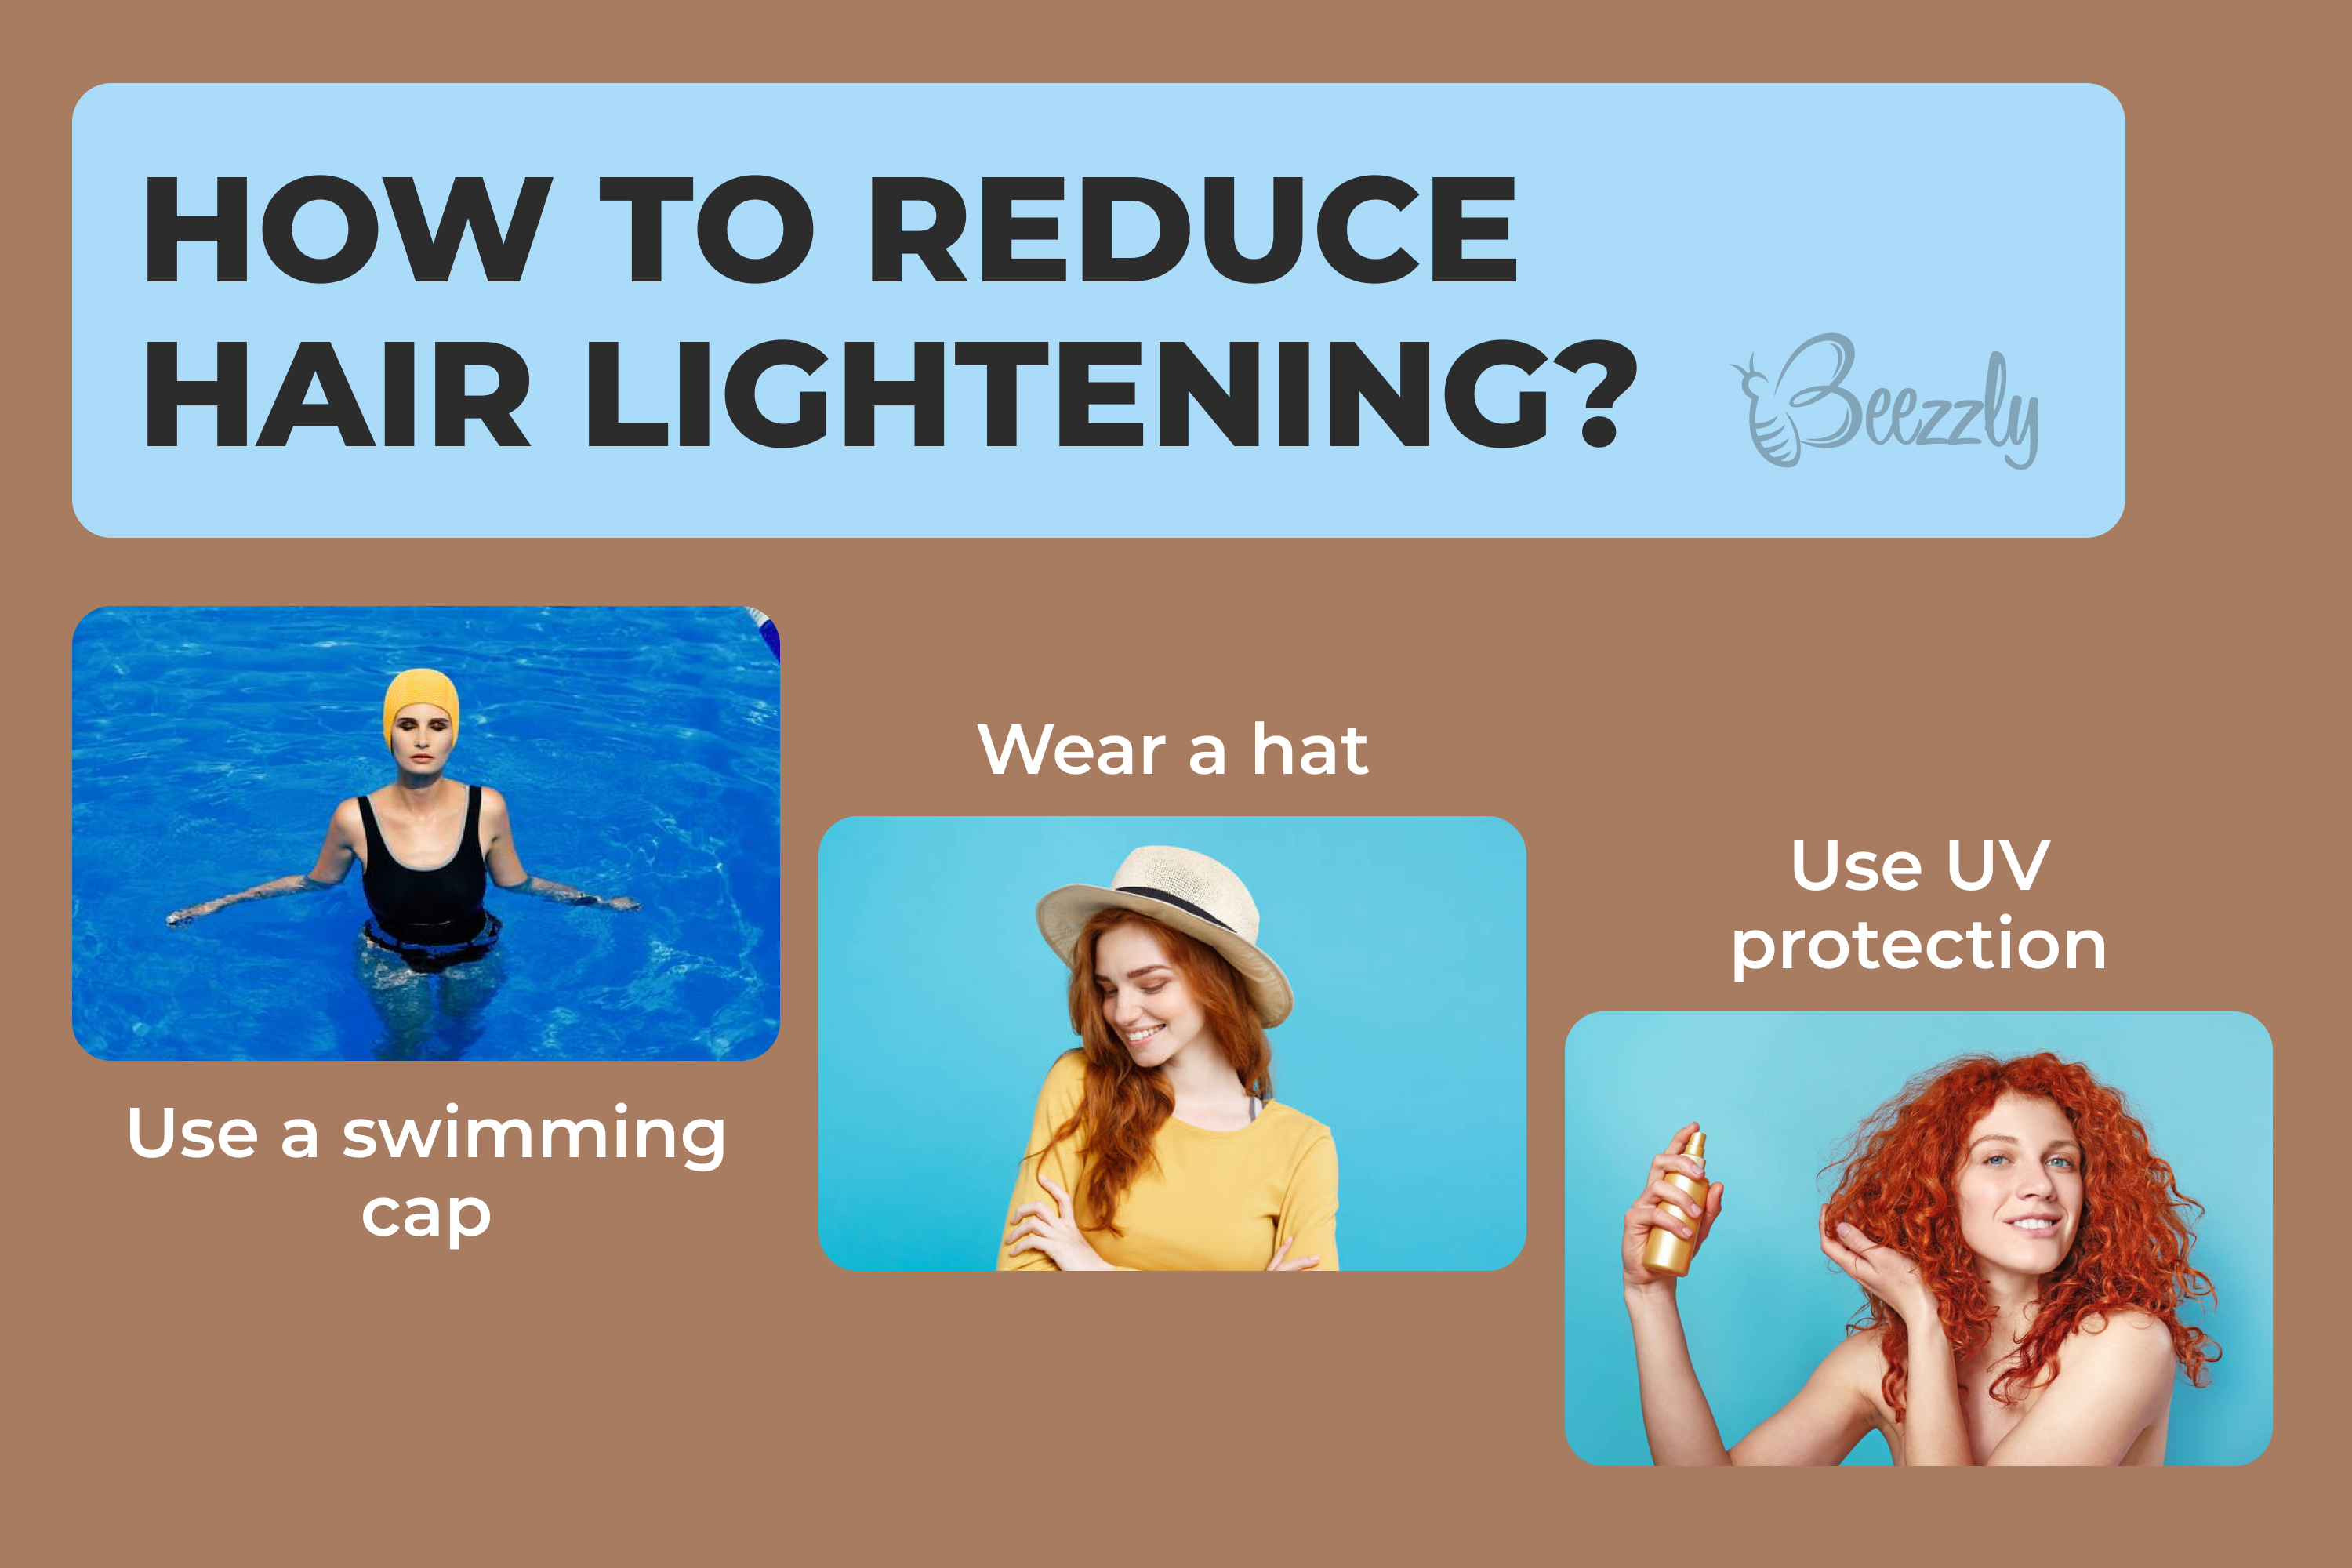 How to reduce hair lightening